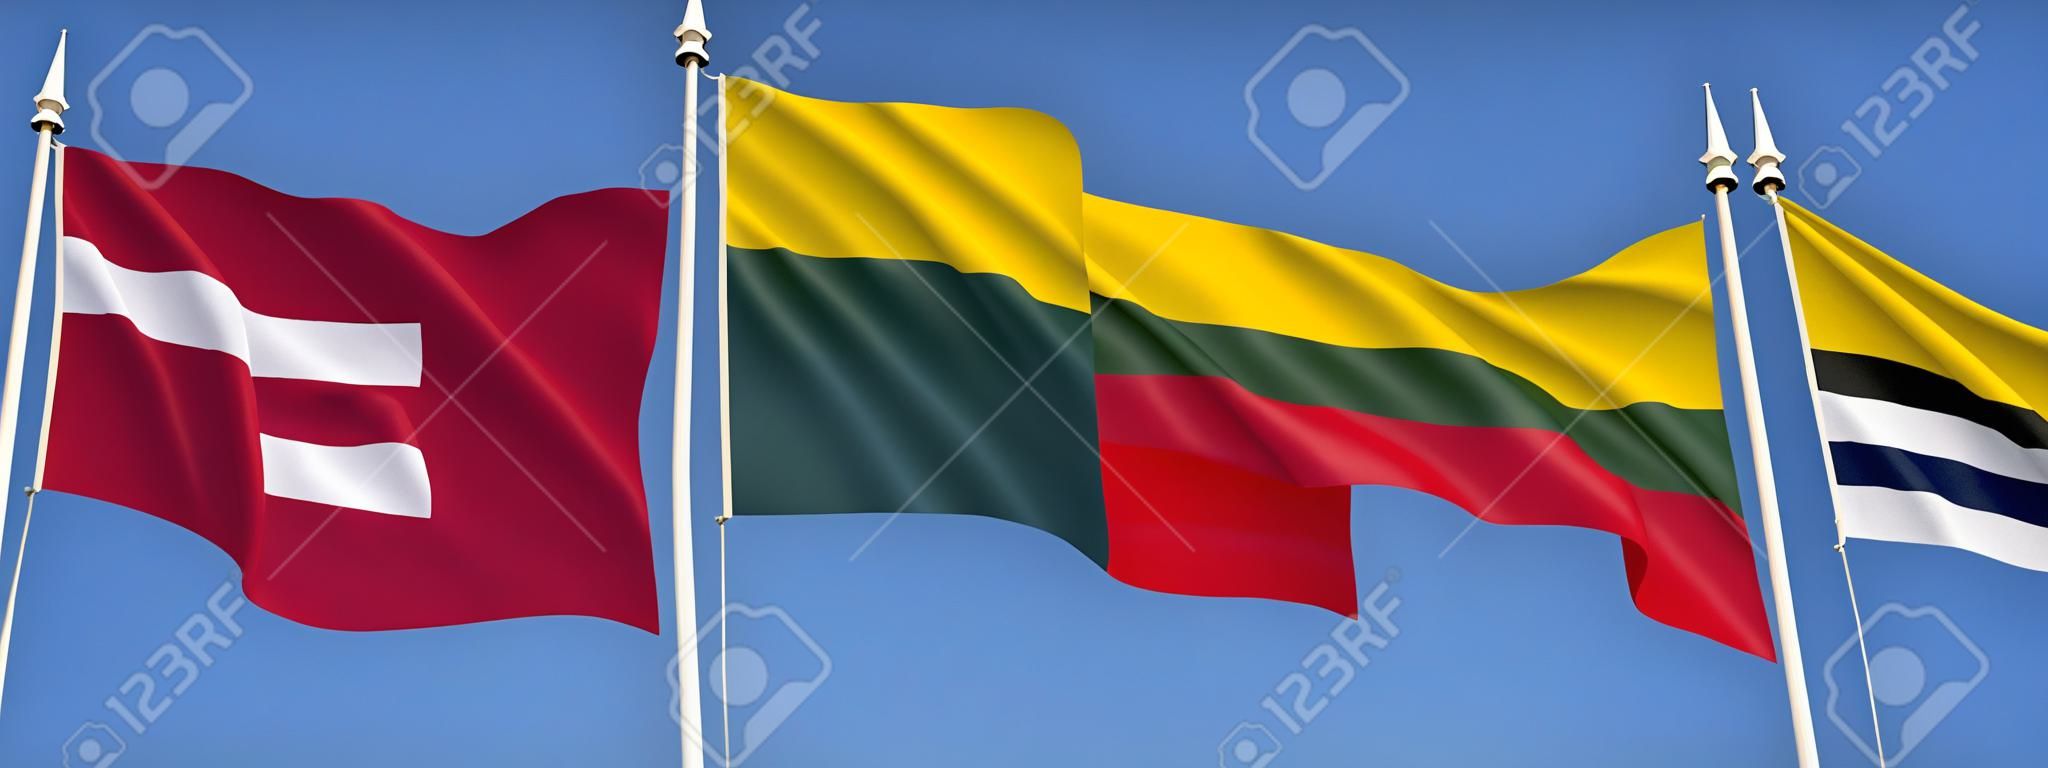 Flags of the Baltic States - Latvia, Lithuania and Estonia.